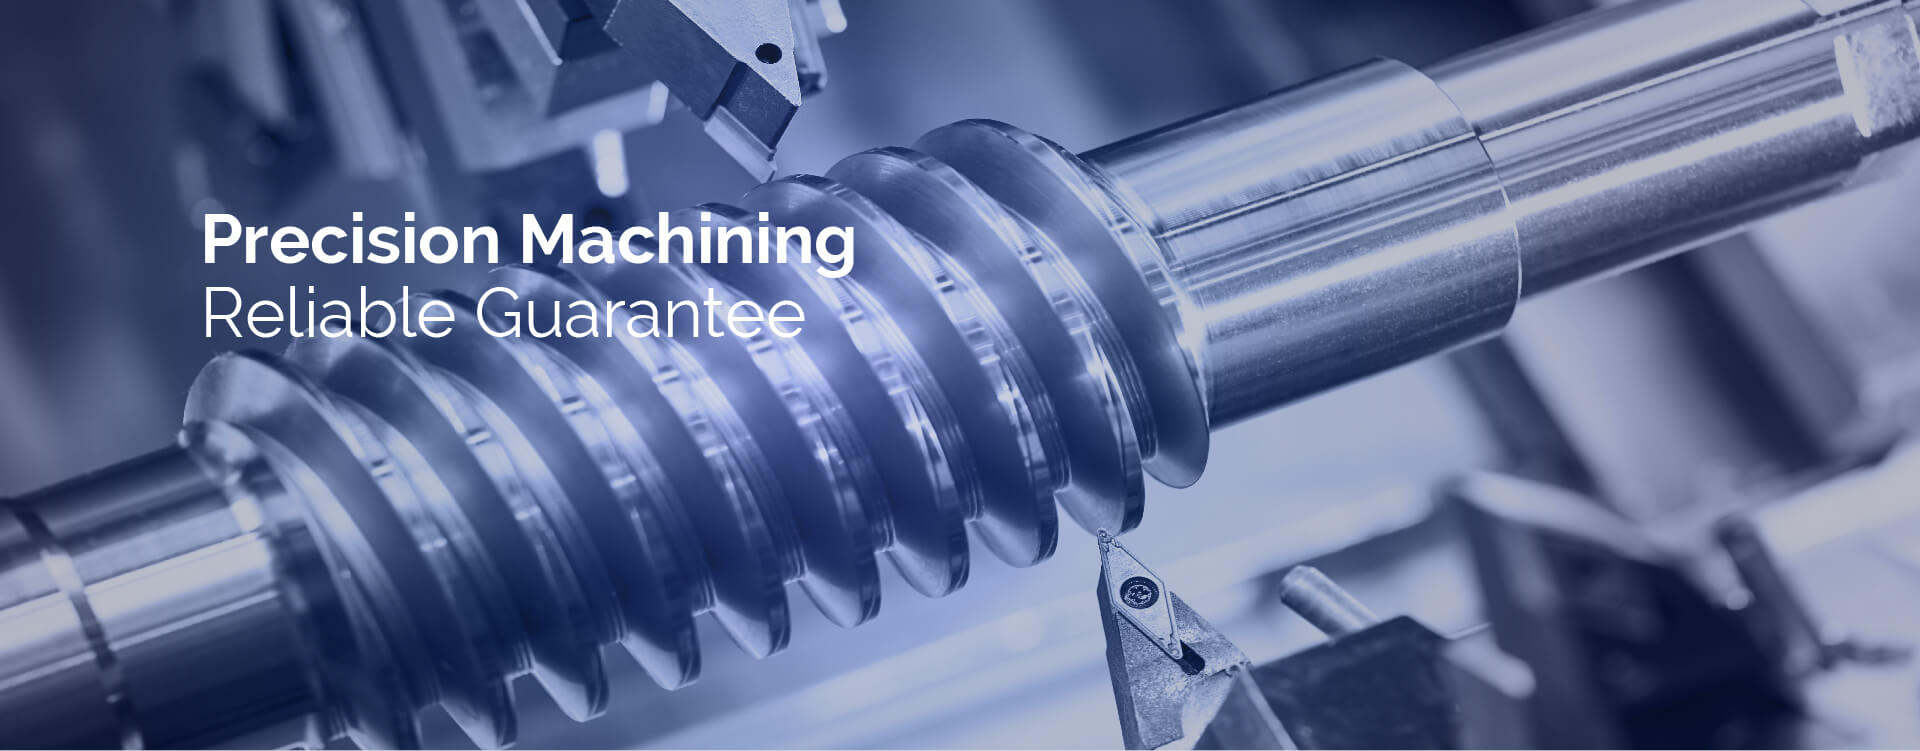   Mecanizado de precisión fiable - Fábrica de mecanizado de precisión CNC 